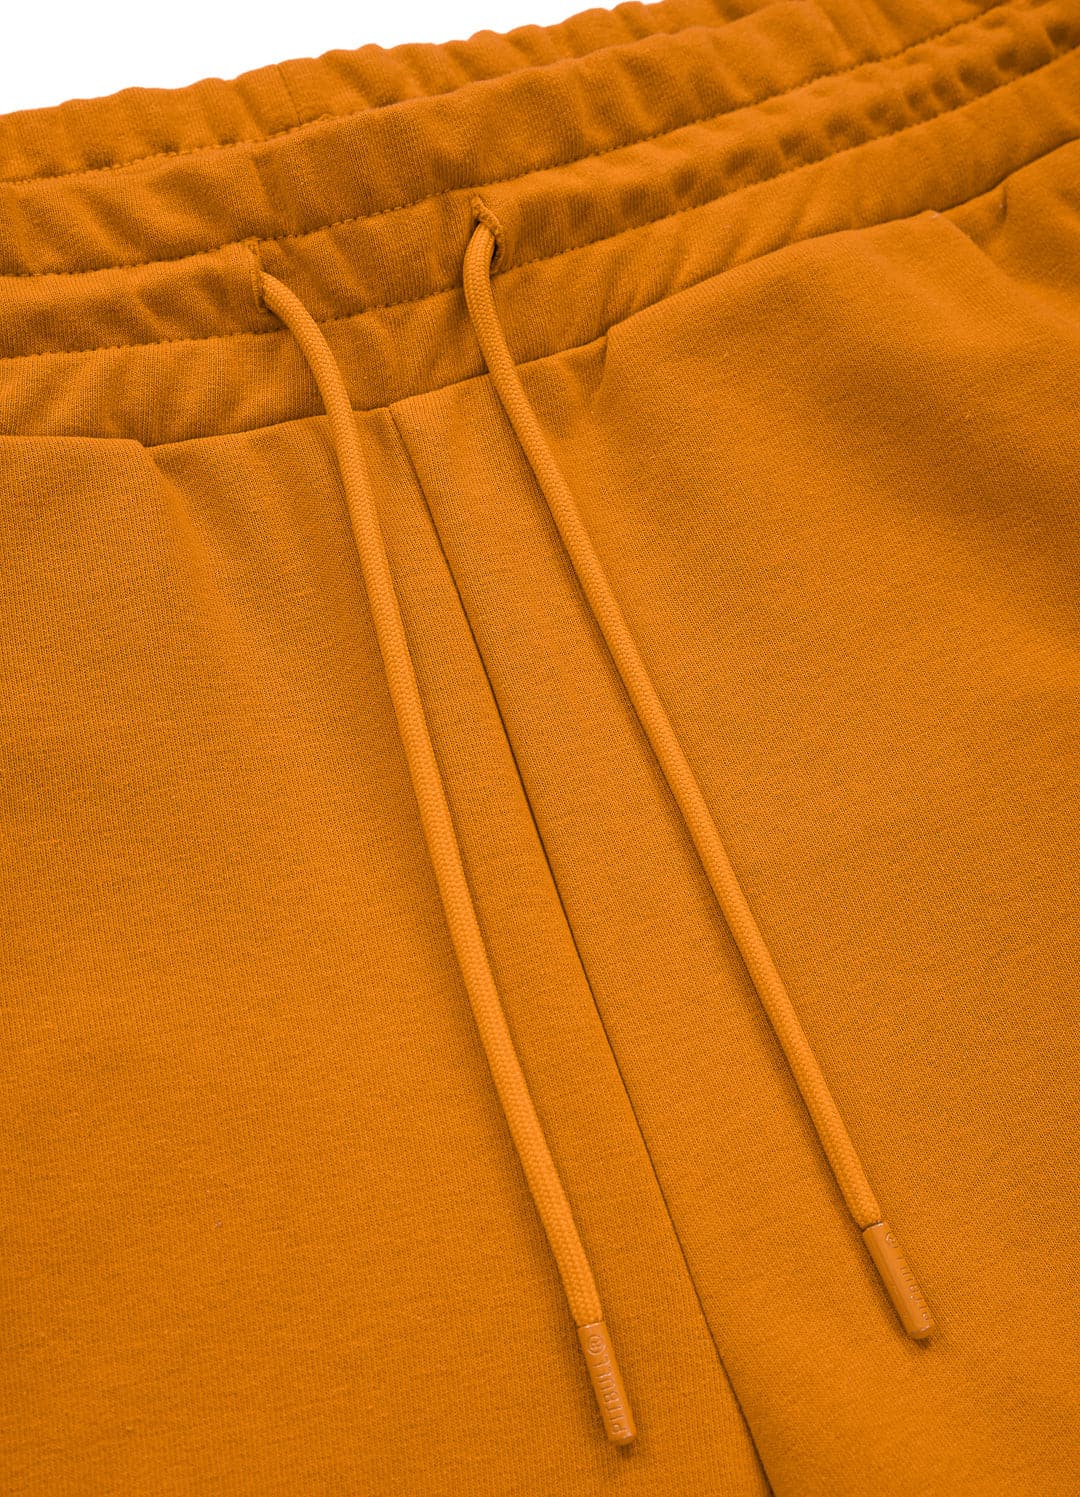 MERIDAN Honey Yellow Shorts.